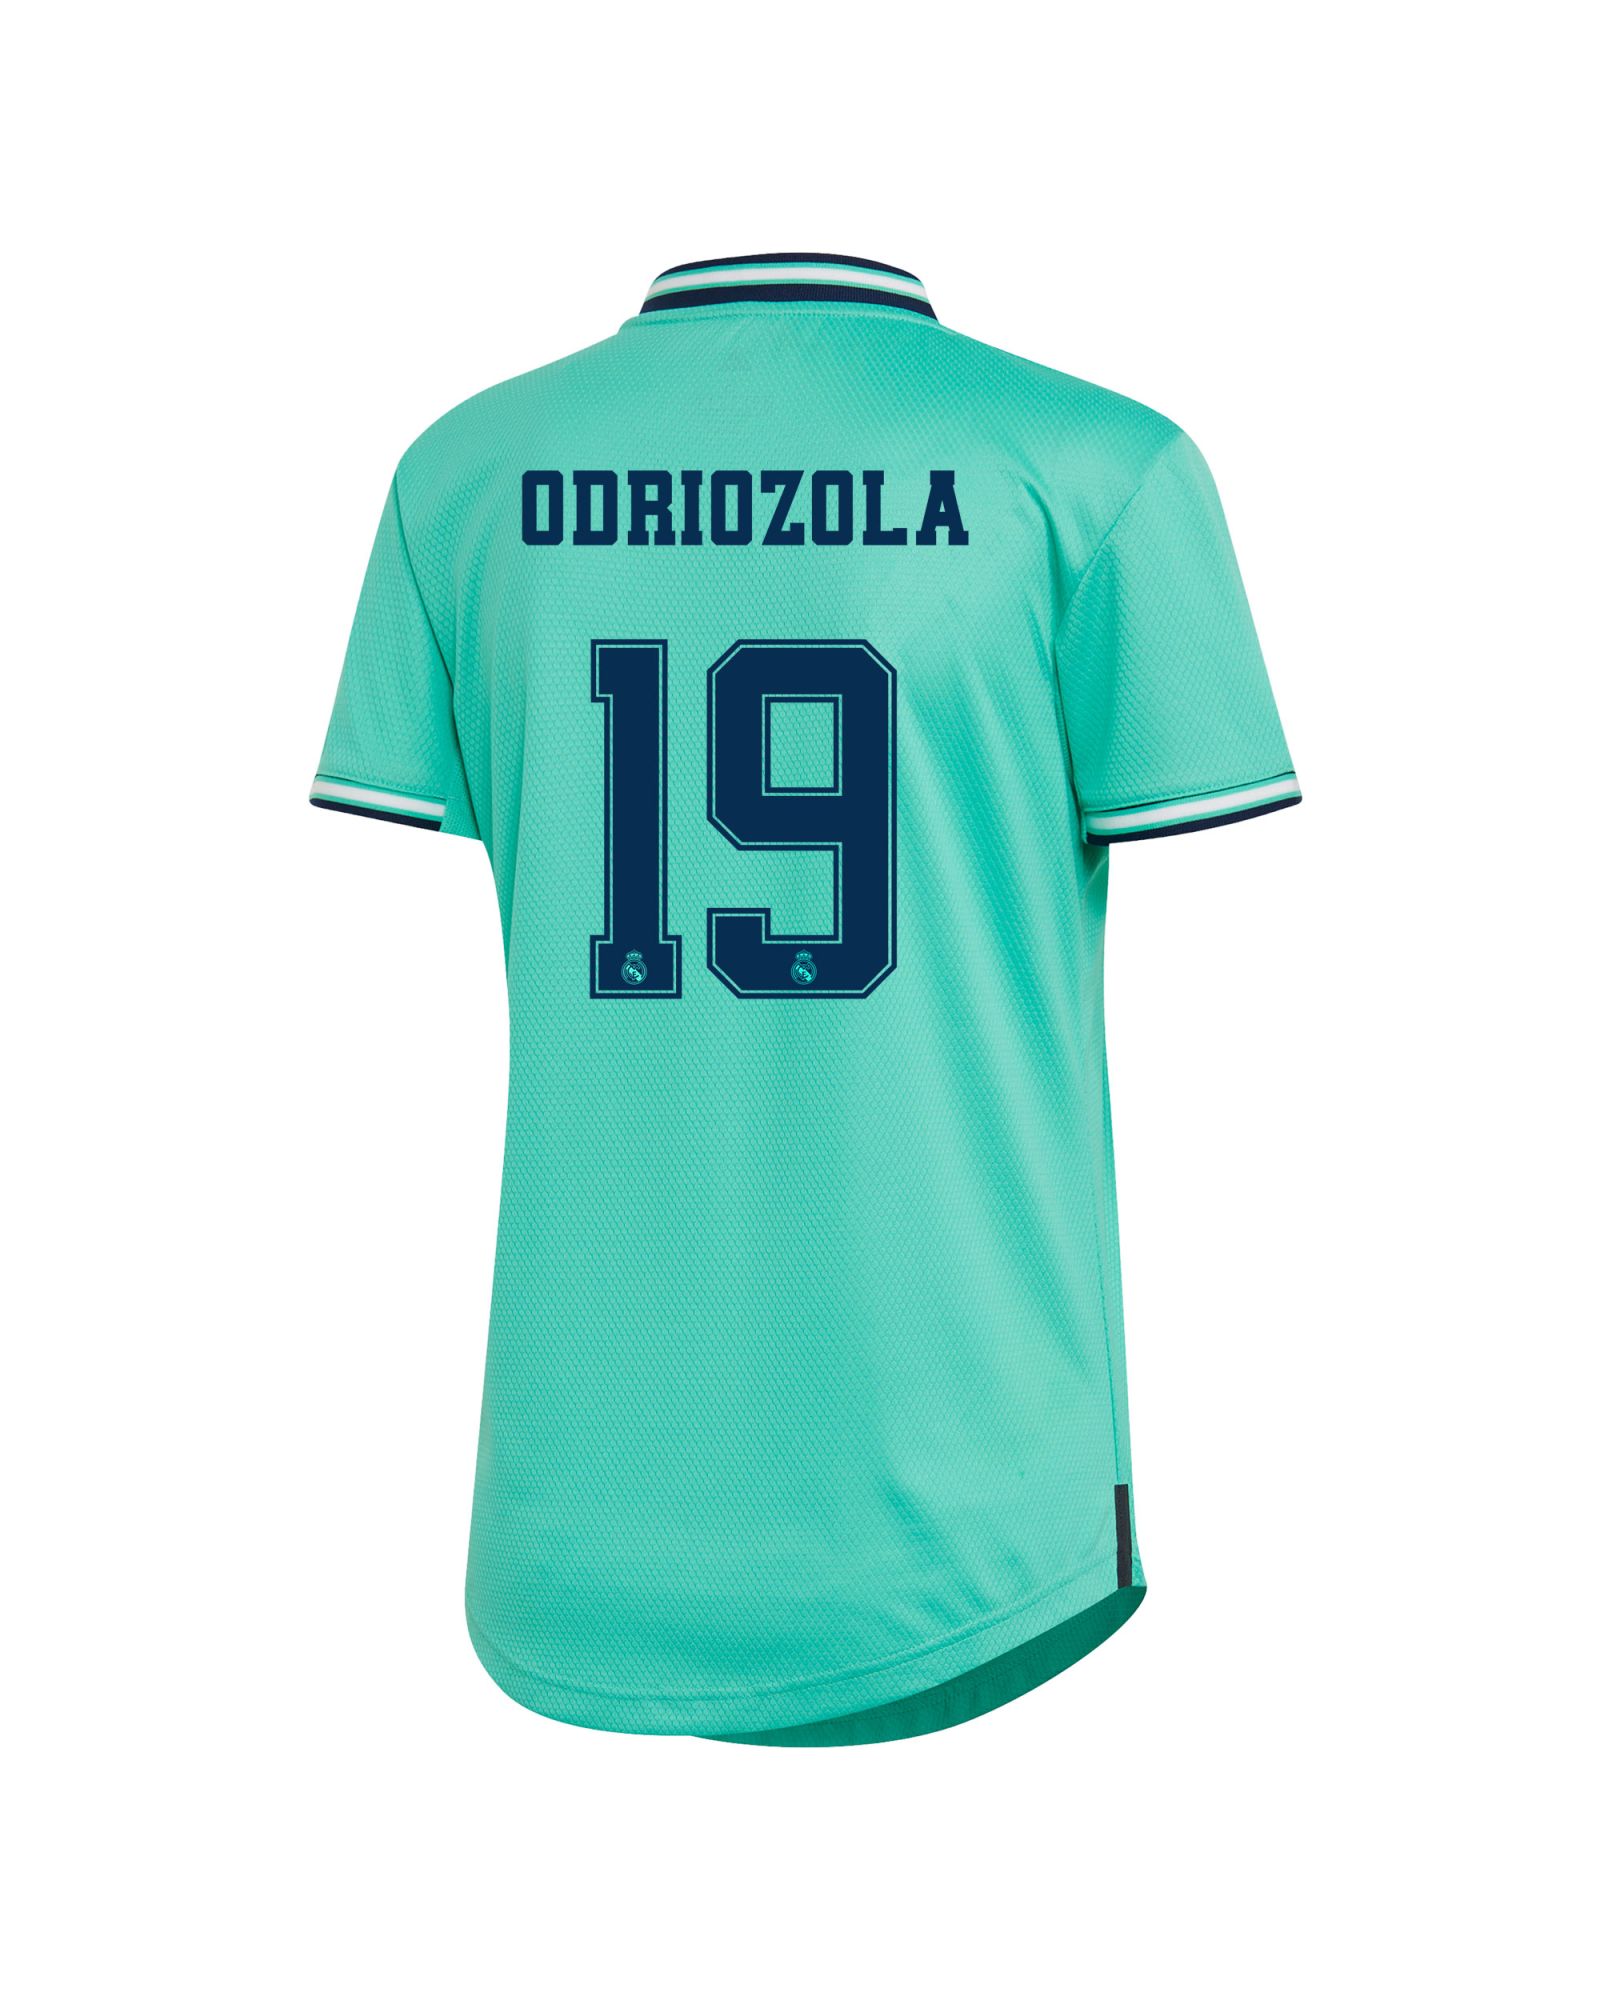 Camiseta 3ª Real Madrid 2019/2020 Mujer Verde Odriozola - Fútbol Factory